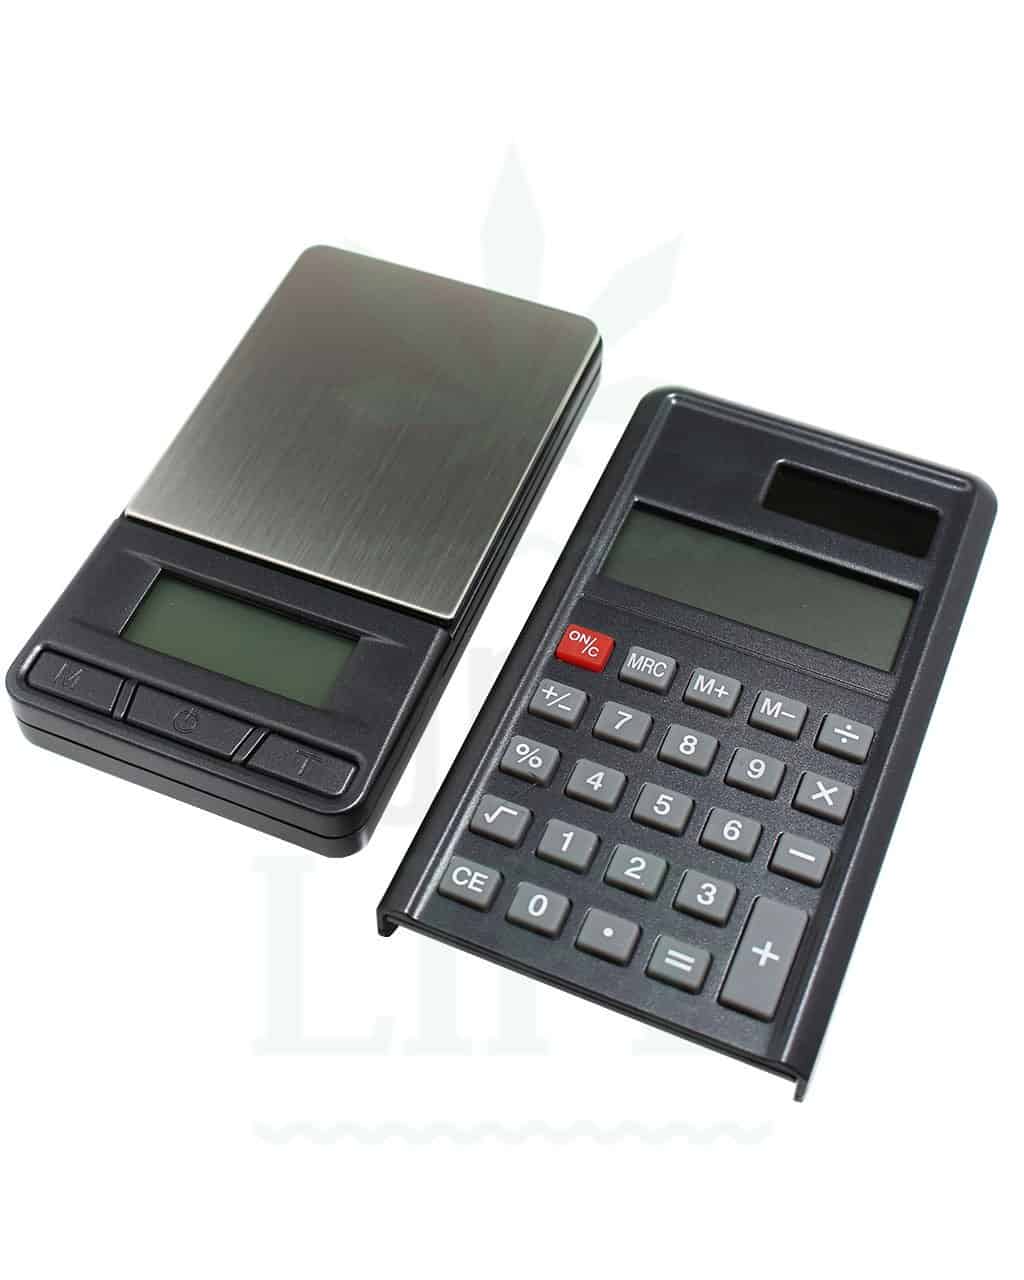 Digital scale CA with calculator 300g/0.01g